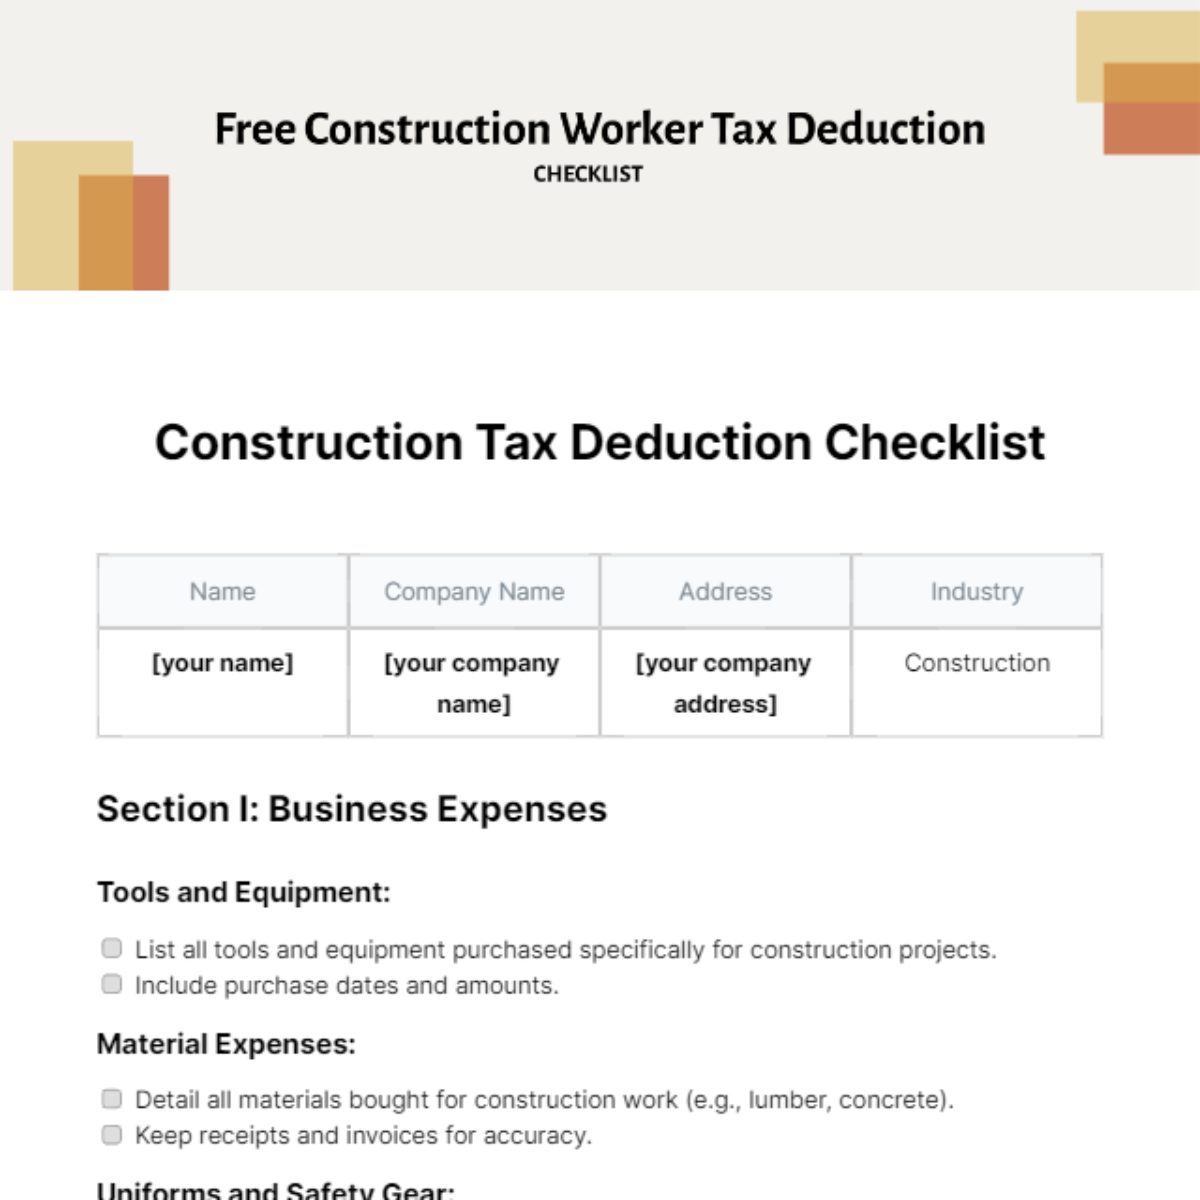 Construction Worker Tax Deduction Checklist Template